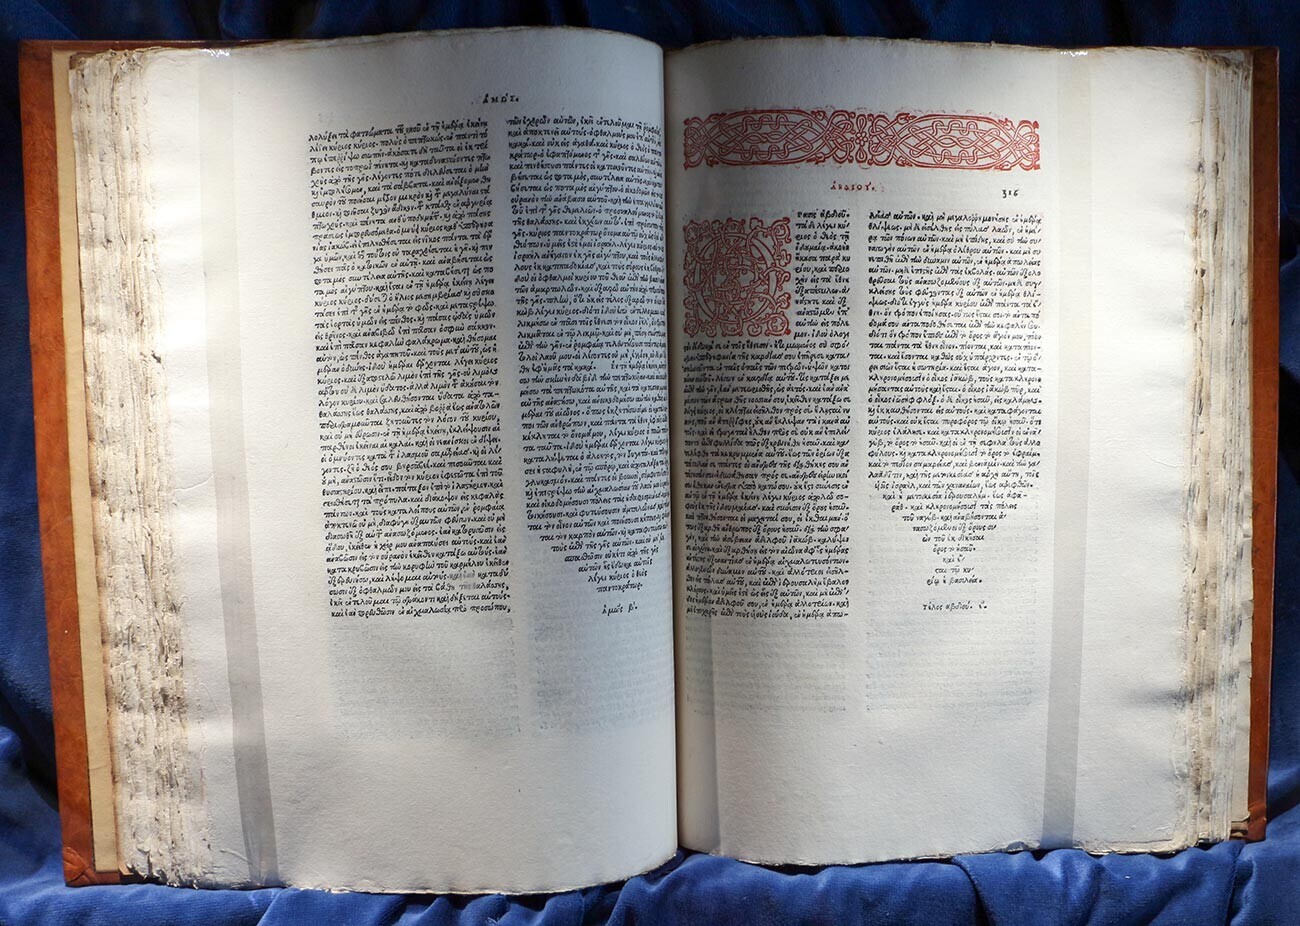 The Aldine Bible, sebuah edisi Alkitab dalam bahasa Yunani yang dimulai oleh Aldus Manutius, dan diterbitkan di Venesia pada tahun 1518 oleh Aldine Press. Ini adalah Alkitab lengkap pertama yang dicetak seluruhnya dalam bahasa Yunani (Perjanjian Lama dalam Septuaginta) yang diterbitkan.